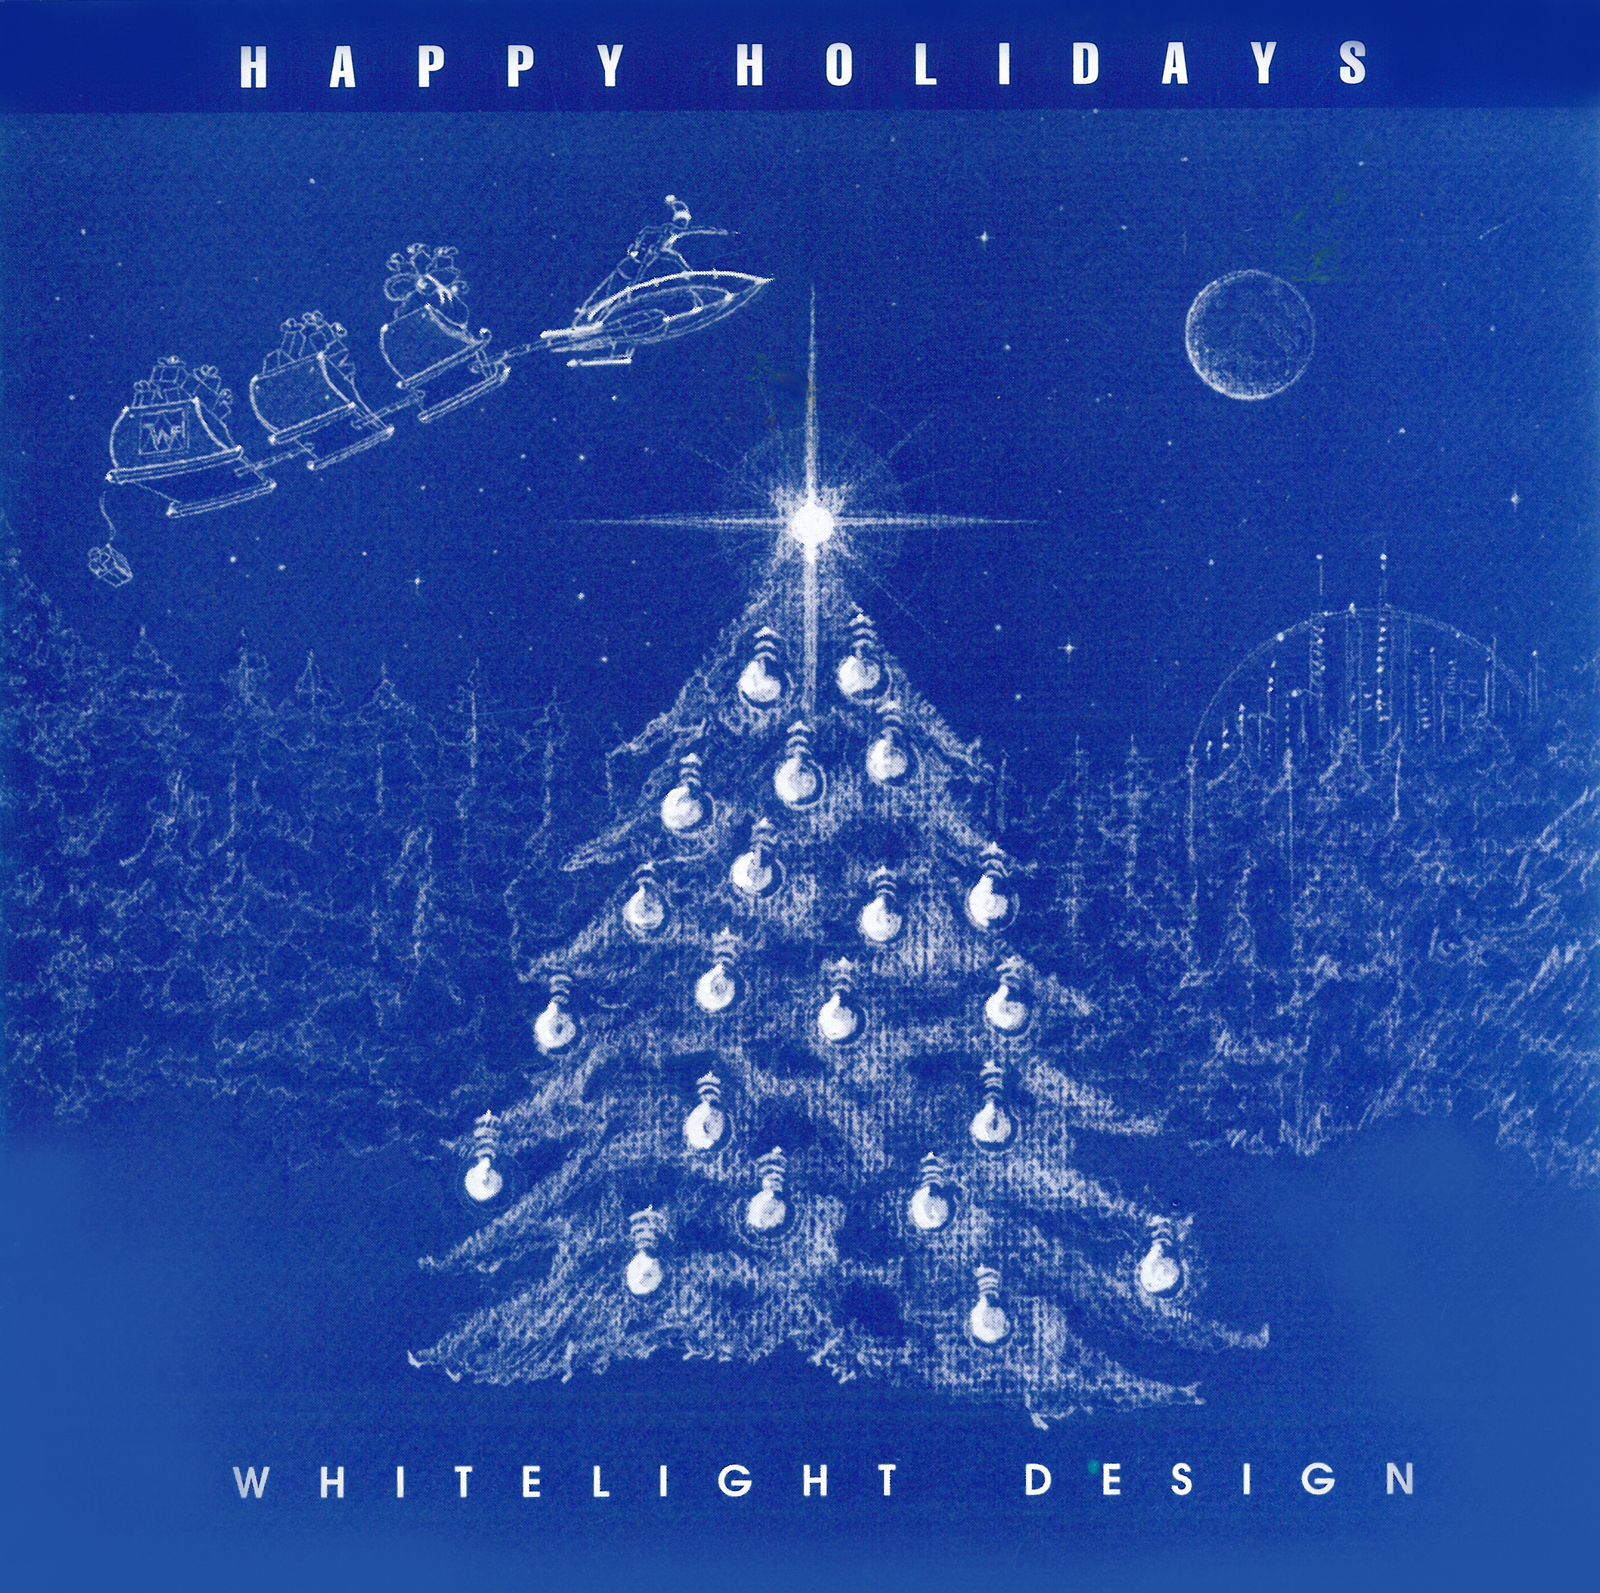 Tree Light - 1997 Holiday Card